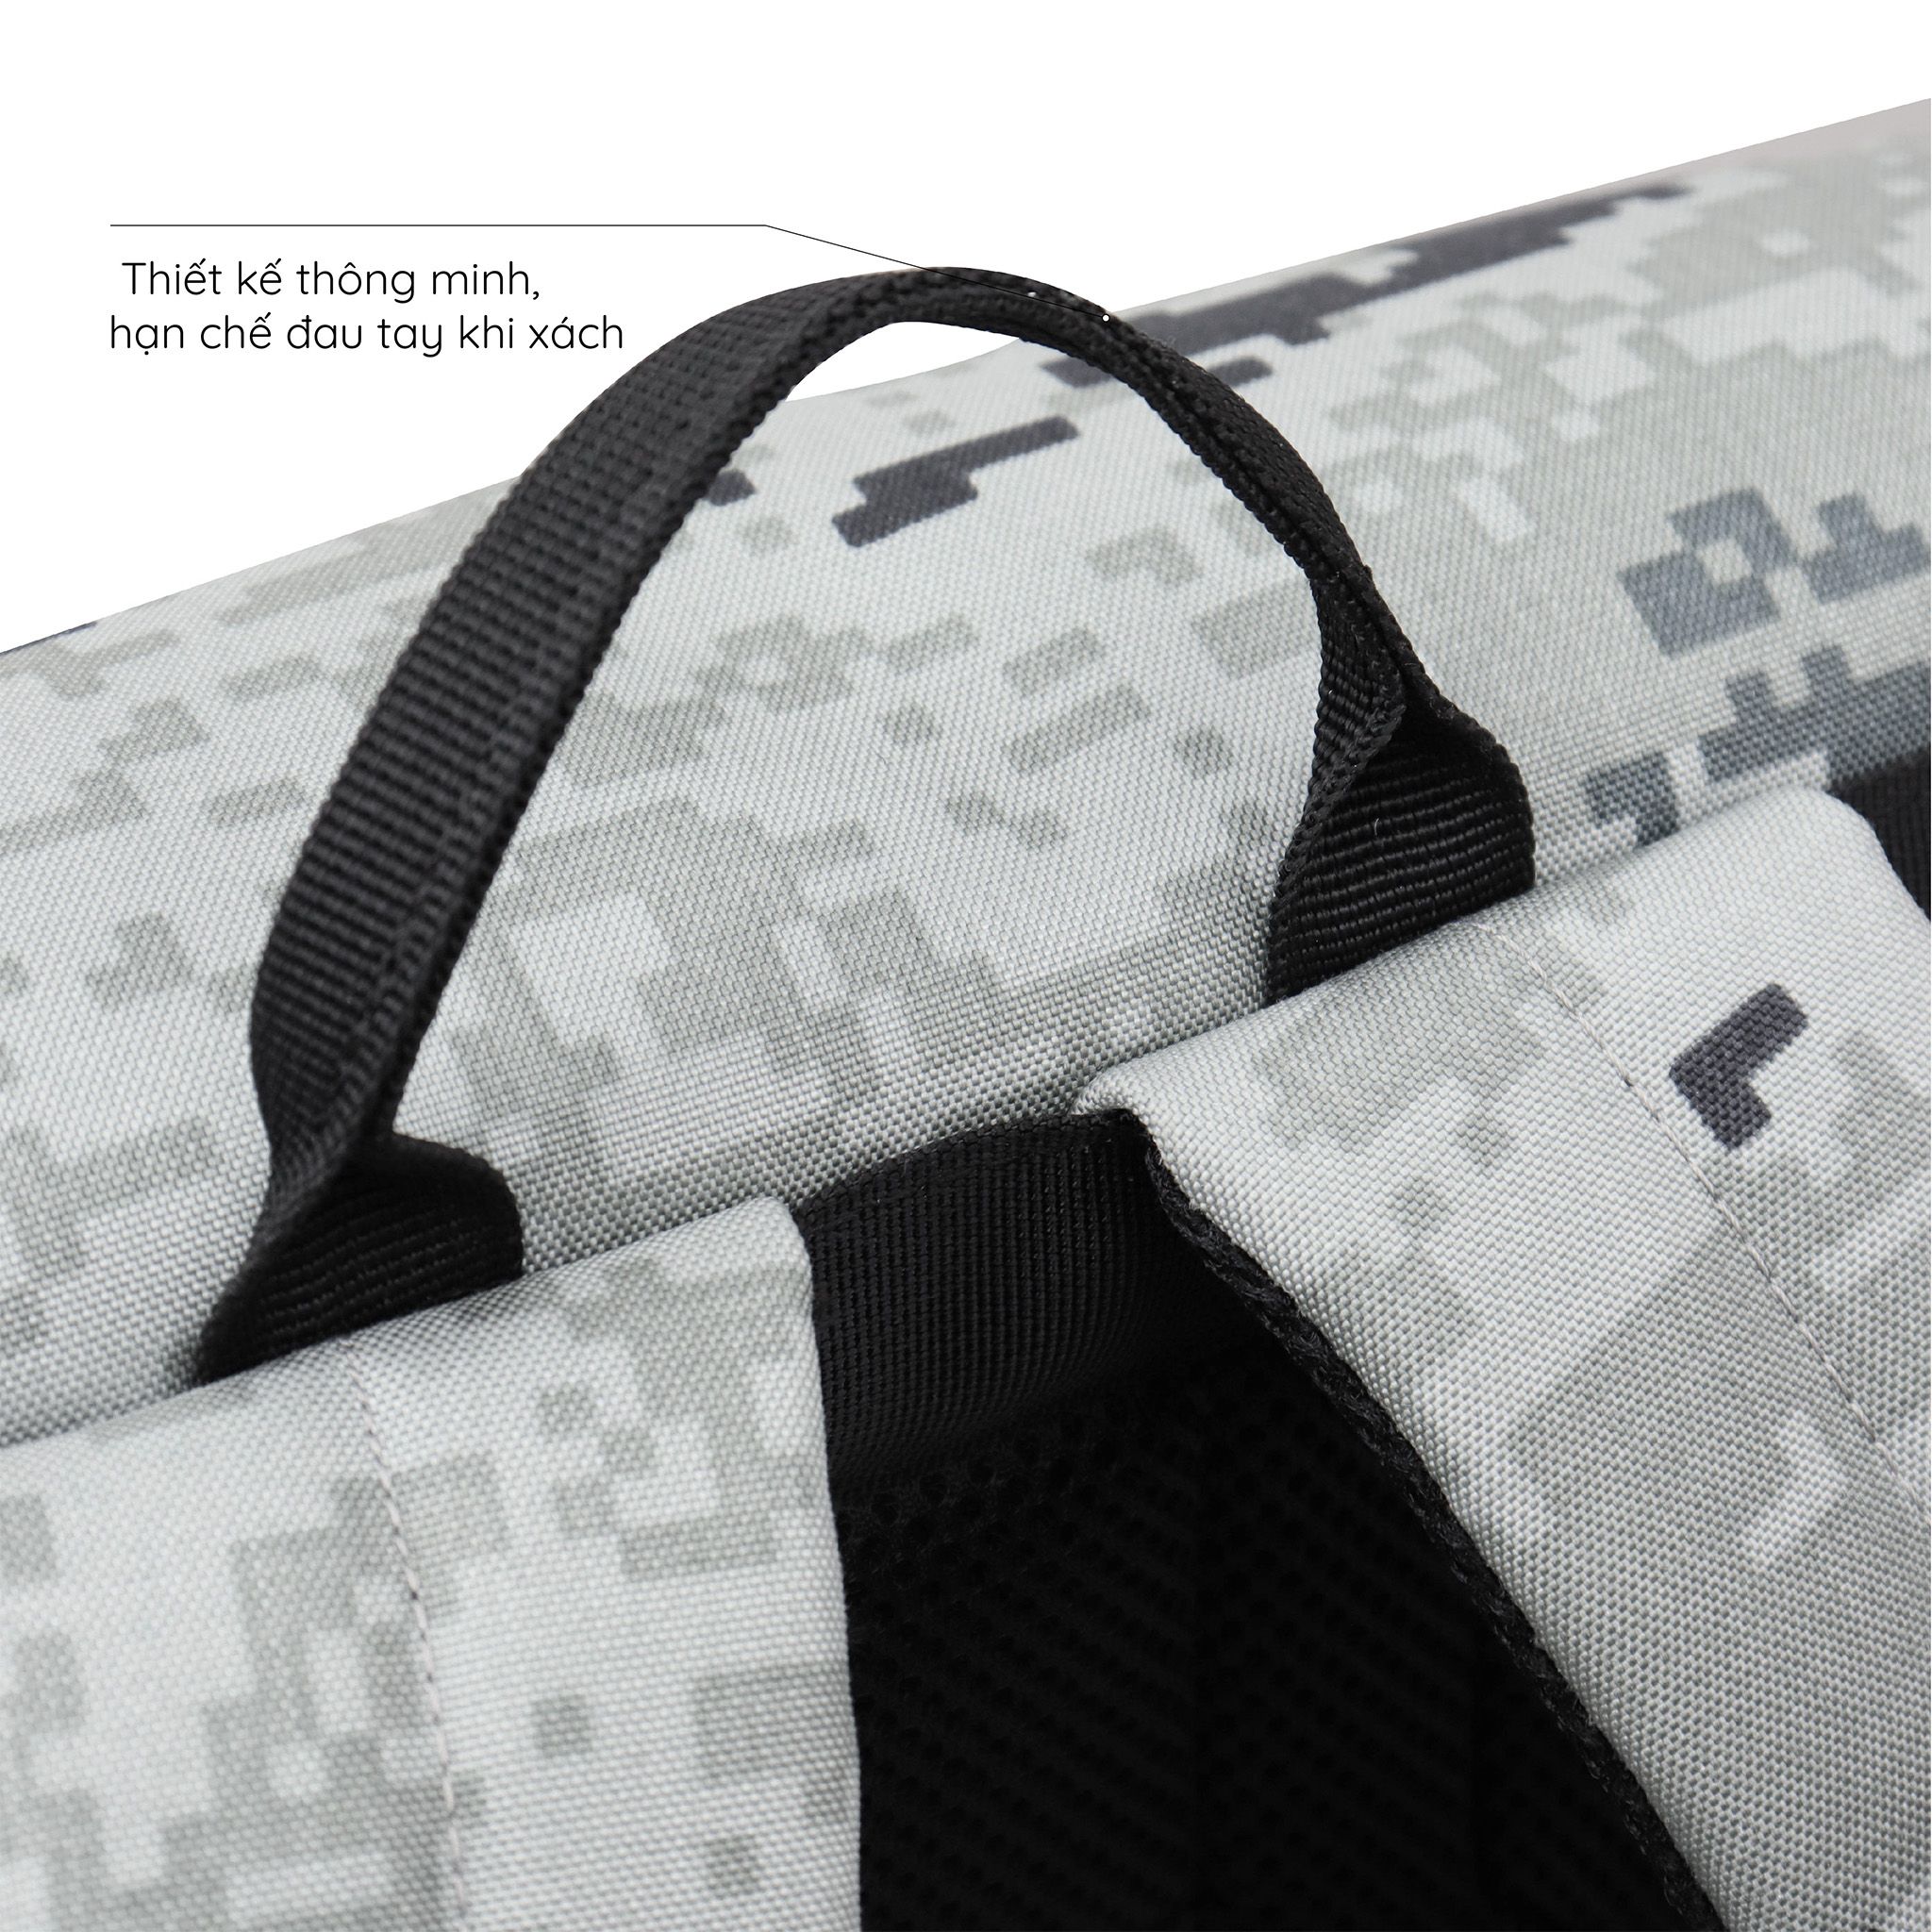  Urban Fabric Backpack - Camo 